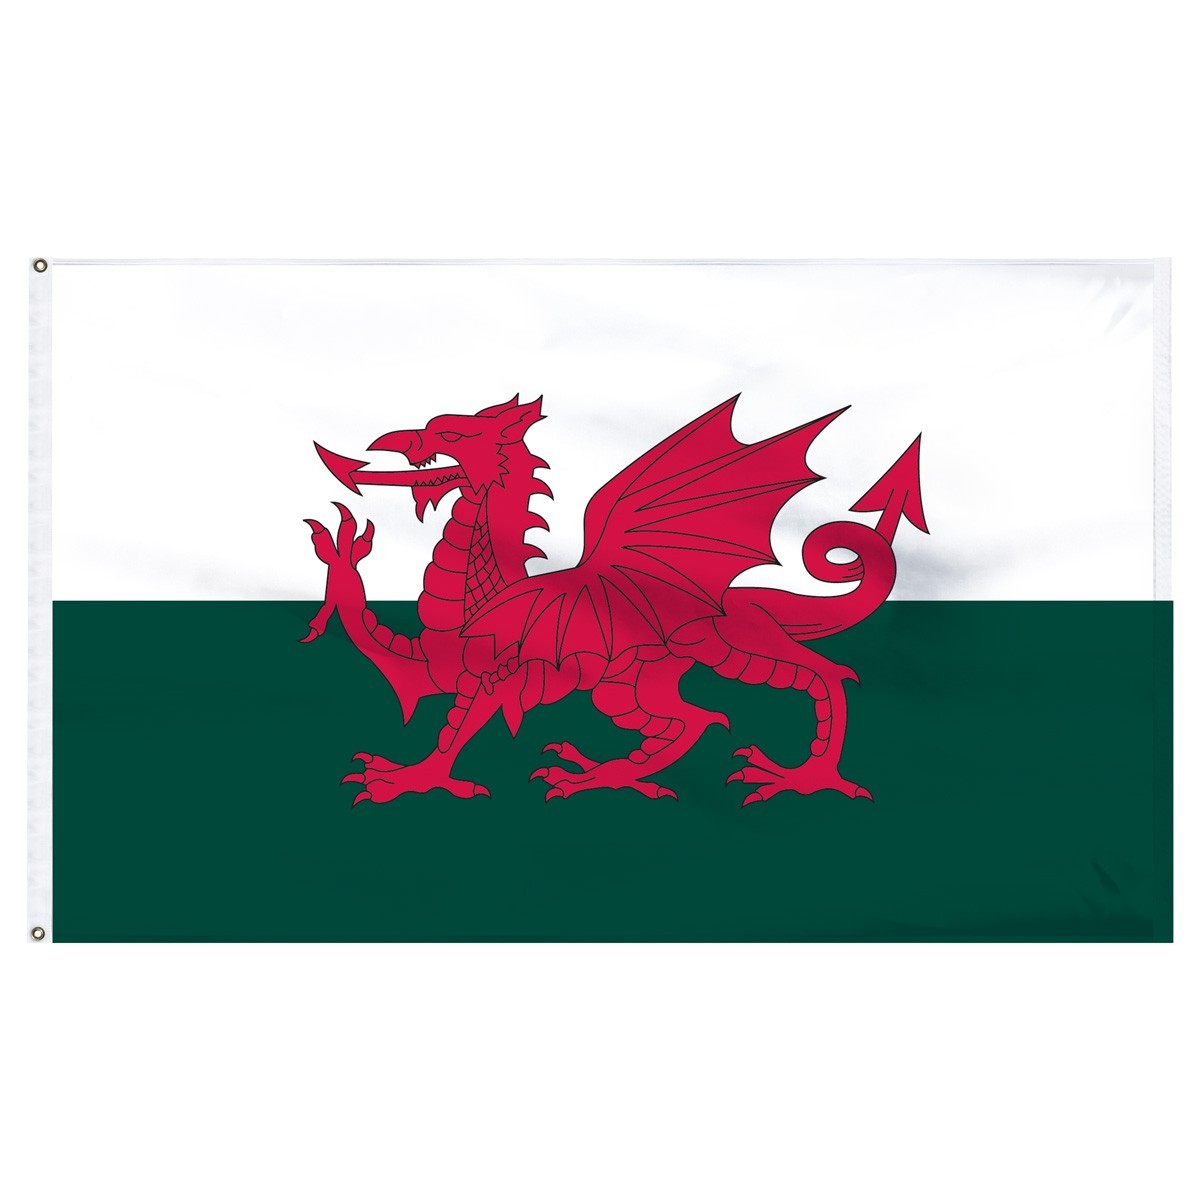 Bandera de nailon para exteriores de Gales de 3 pies x 5 pies